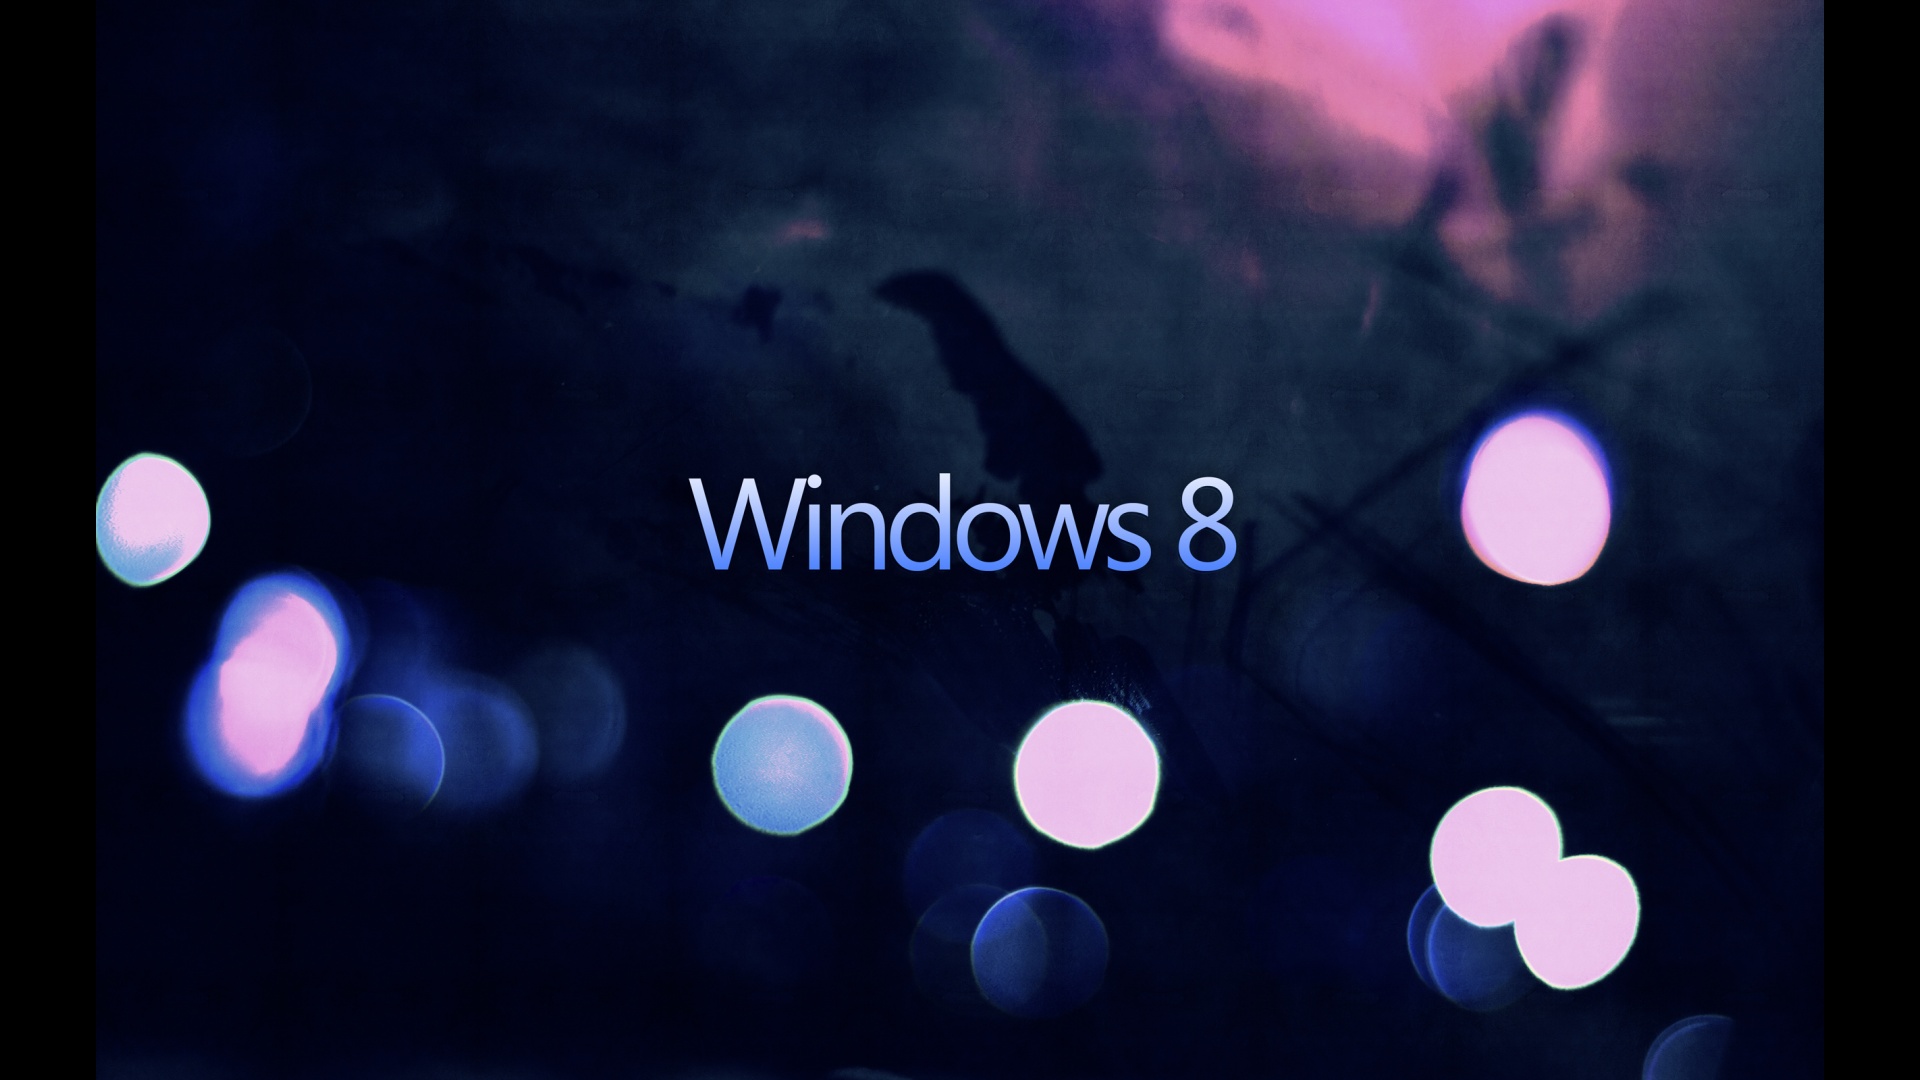 Dark Windows 8 HD Wallpaper | Download HD Wallpapers for Desktop